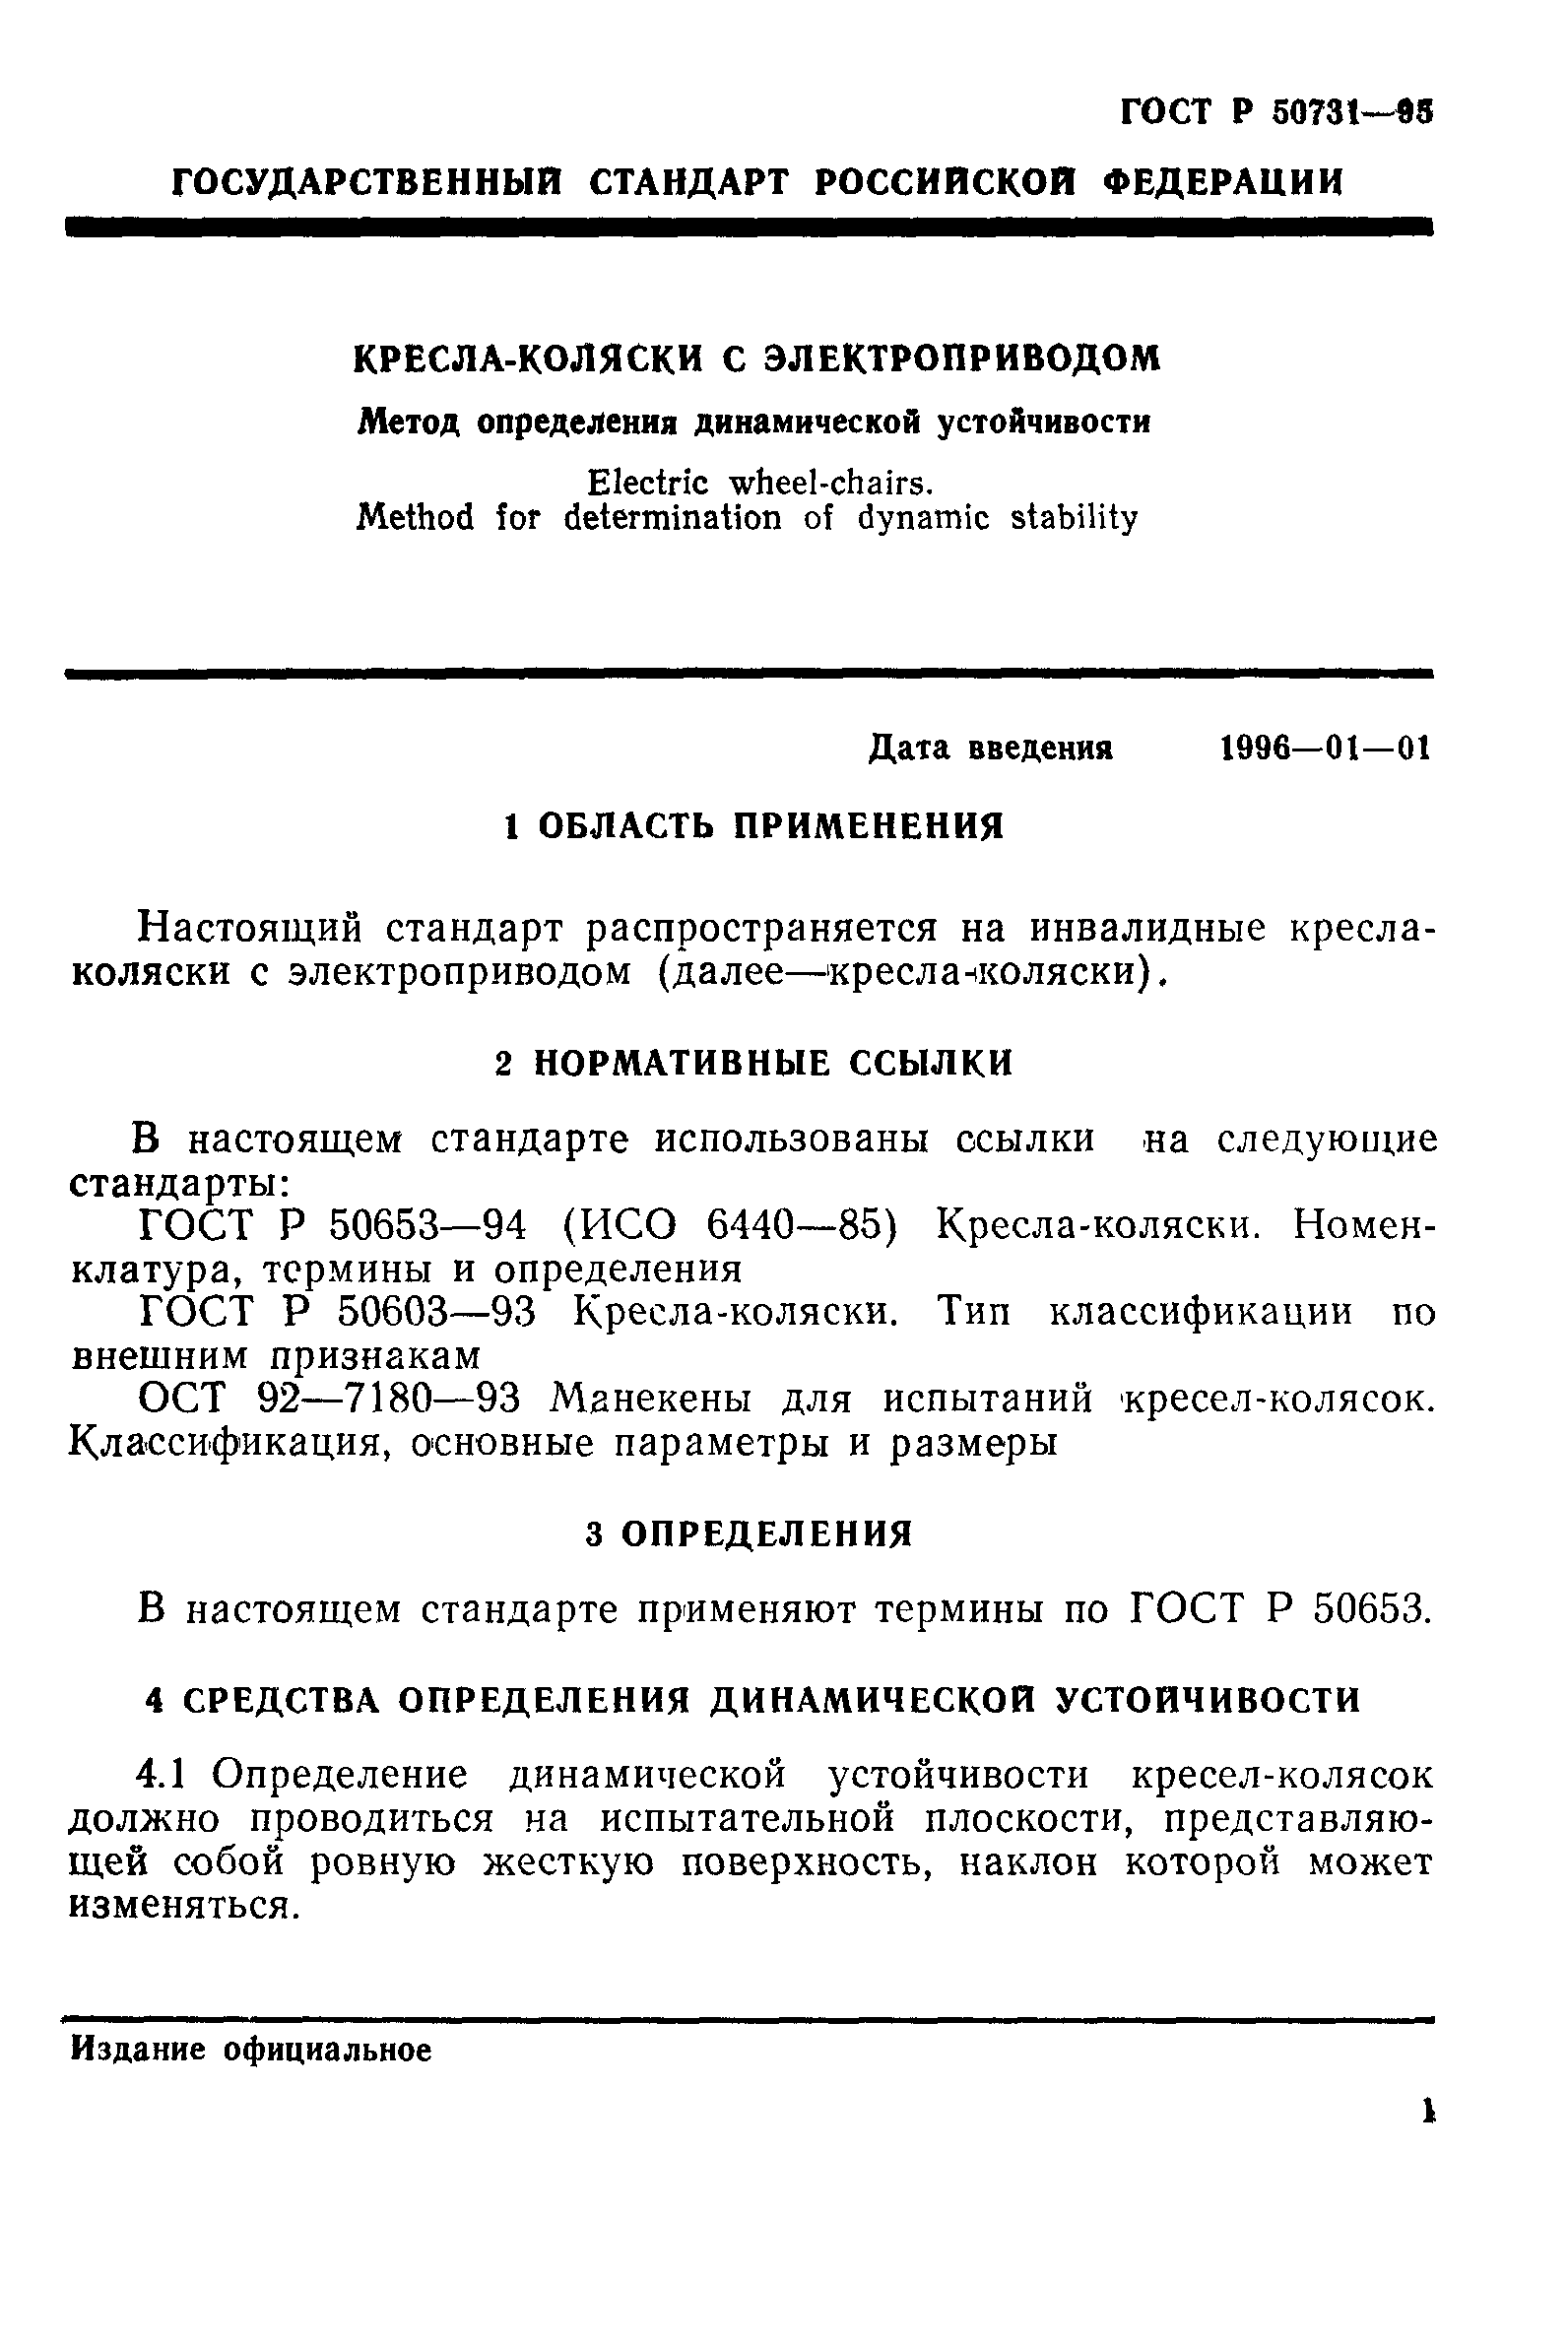 ГОСТ Р 50731-95